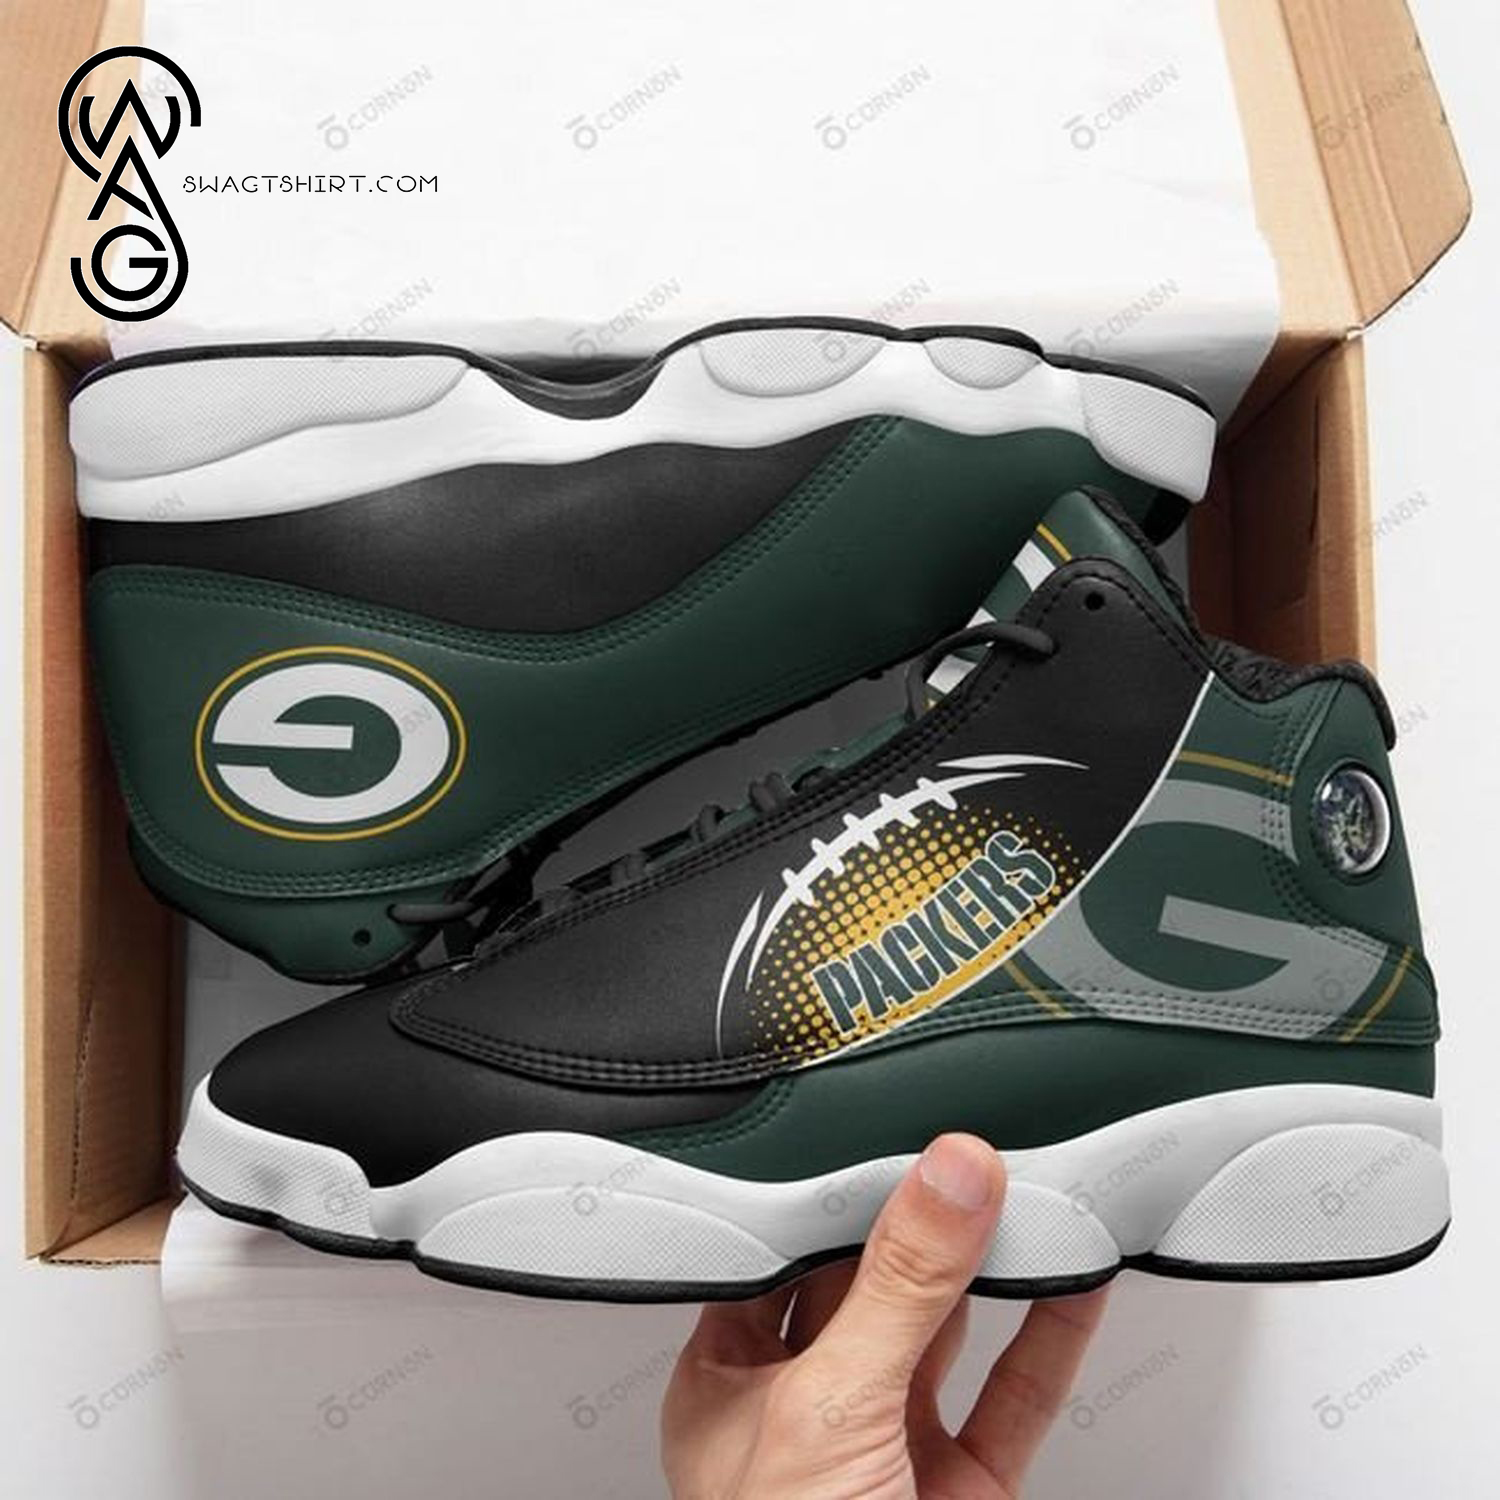 NFL Green Bay Packers Air Jordan 13 Shoes